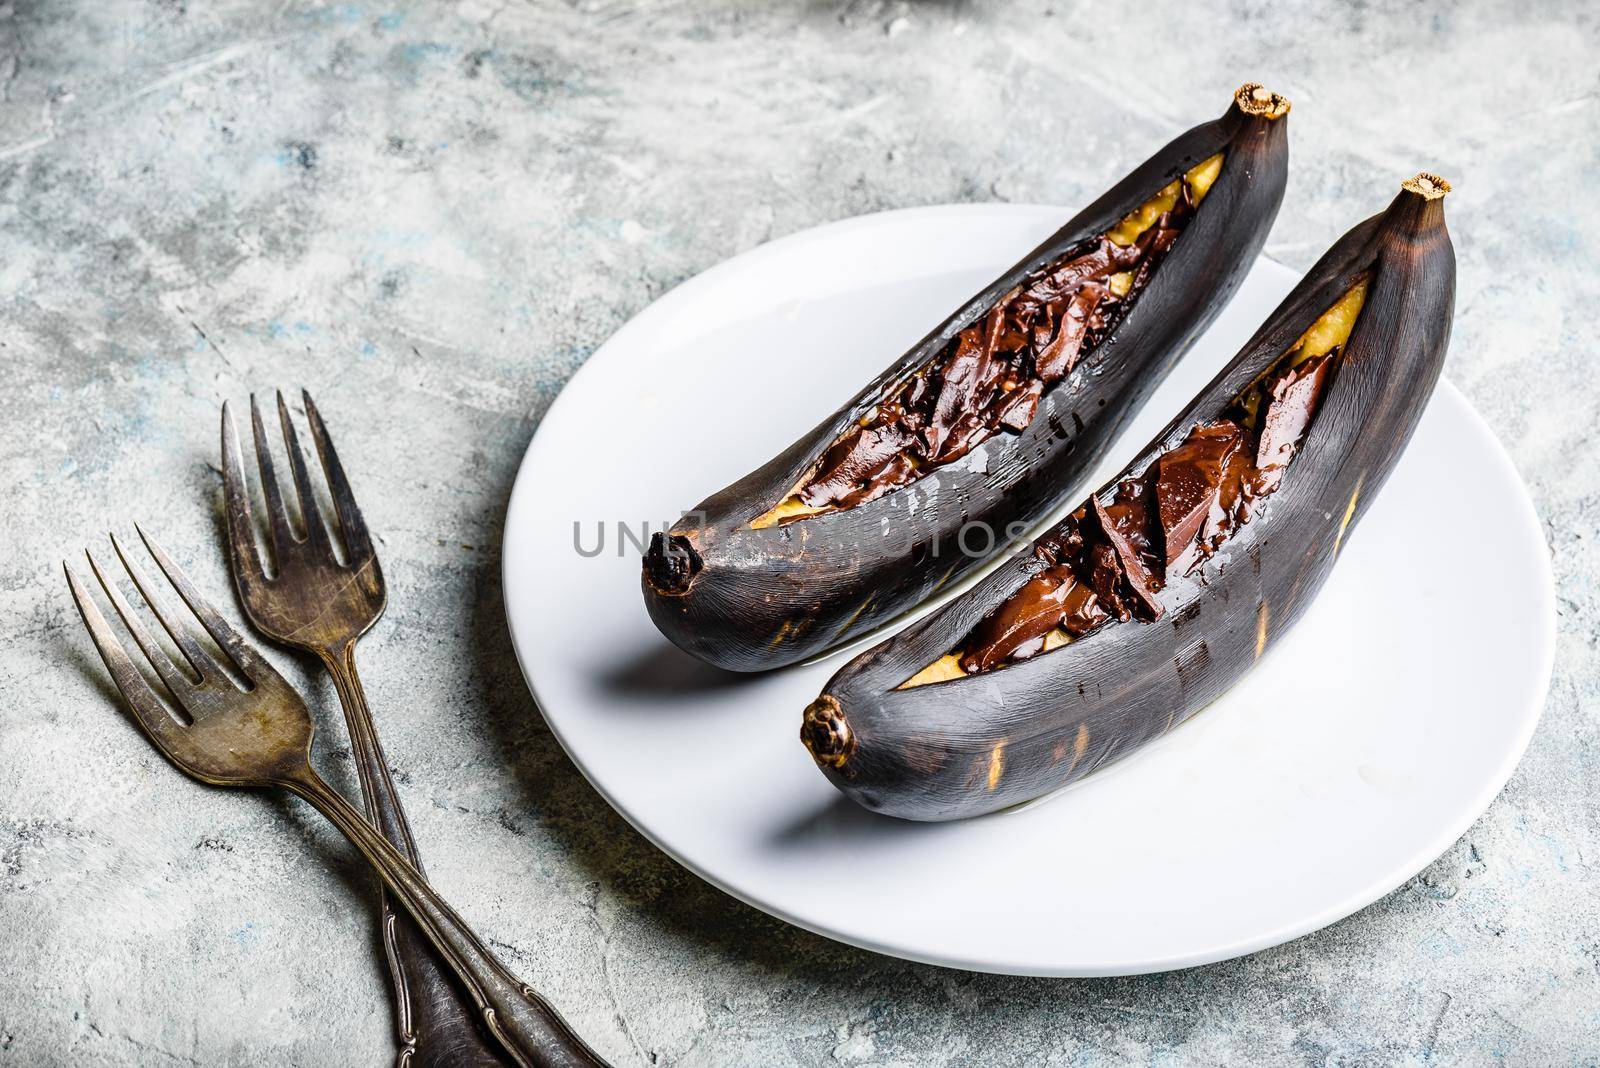 Grilled bananas with dark chocolate by Seva_blsv